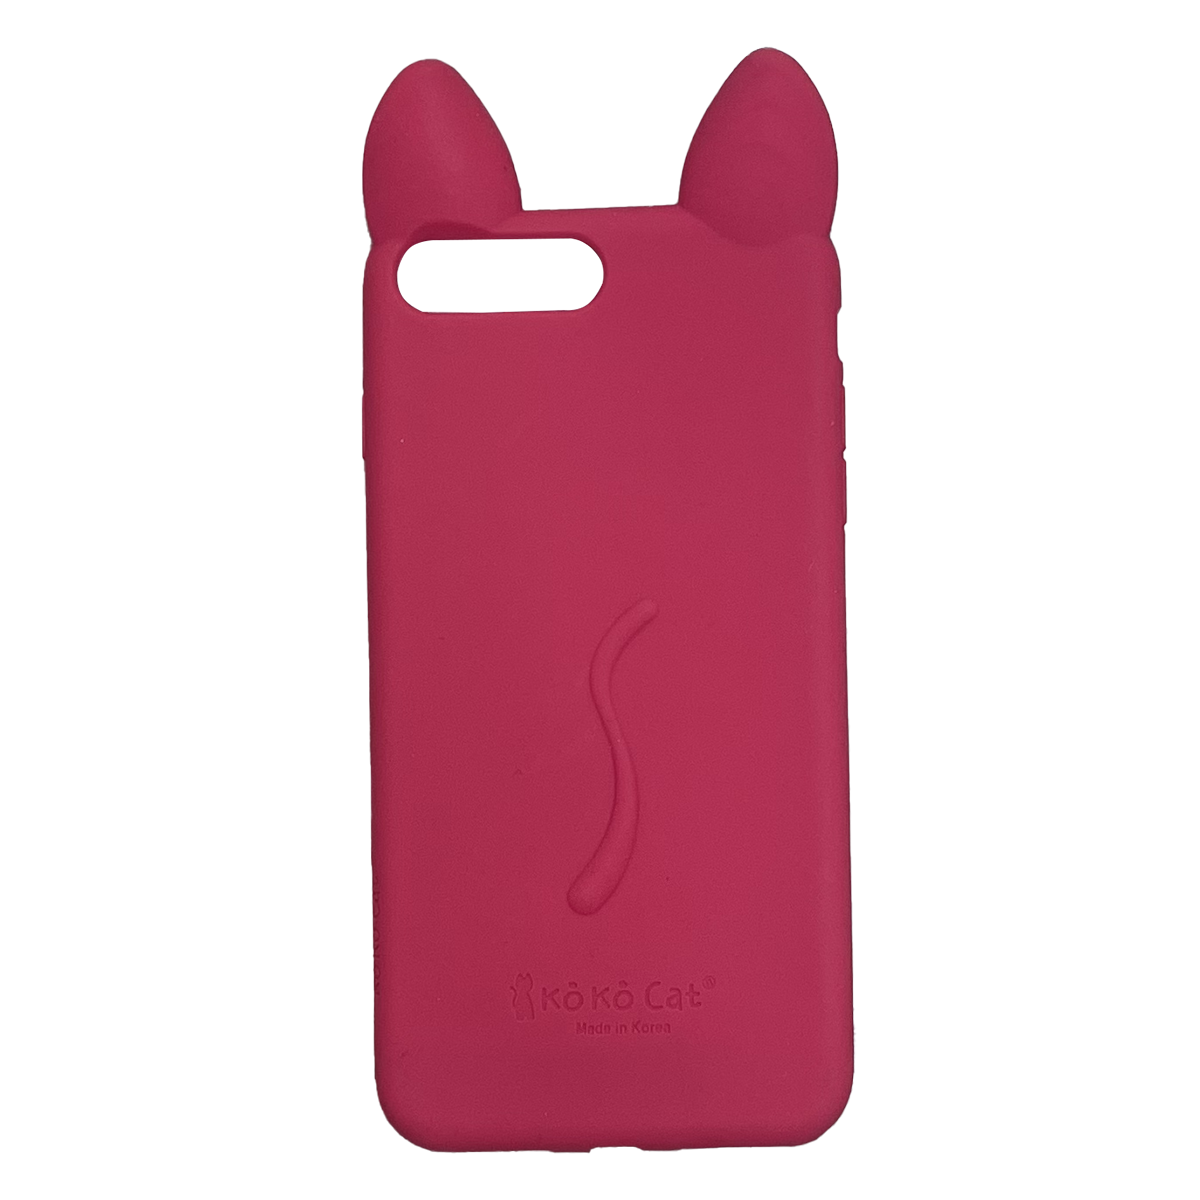 Чохол KoKo Cat для iPhone 7 Plus/8 Plus (Pink)